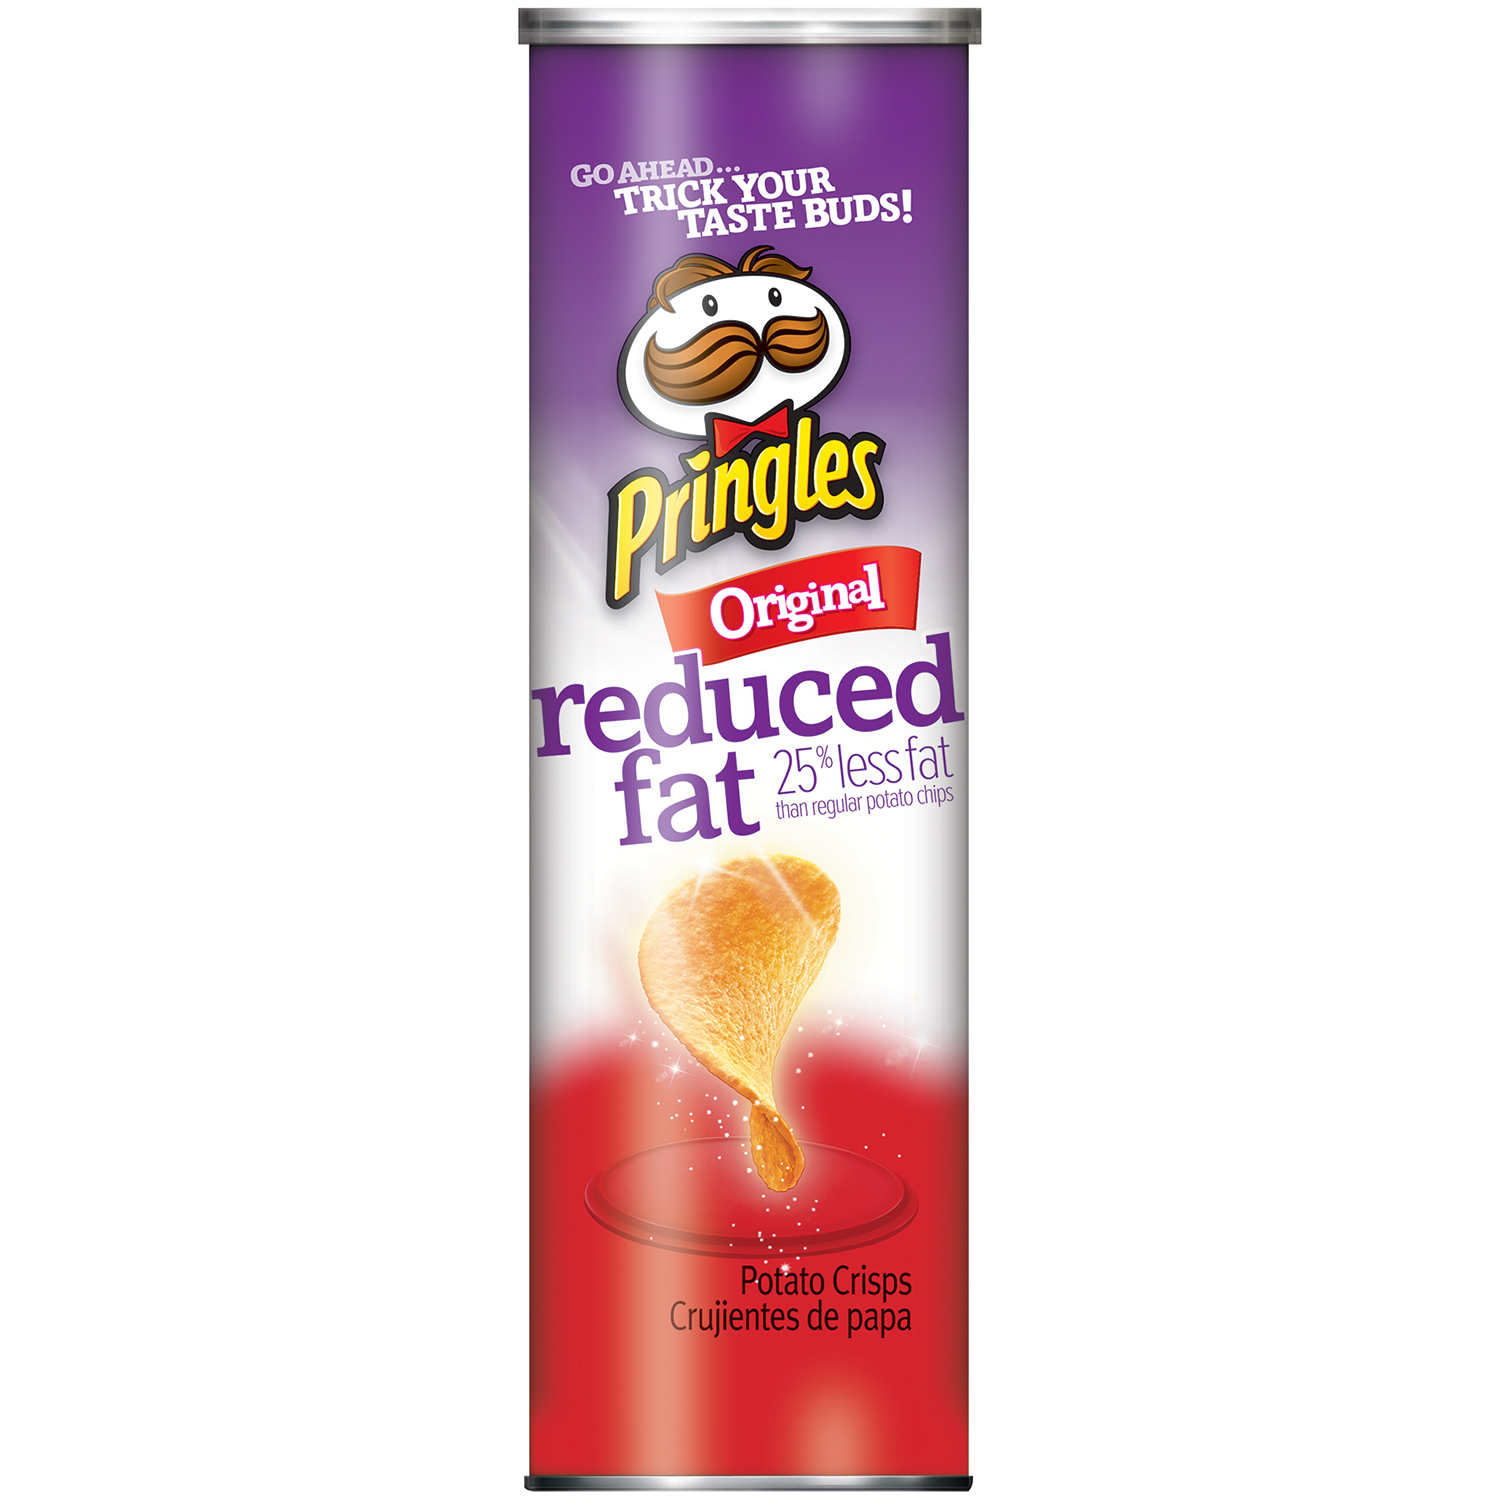 Pringles Potato Crisps Reduced Fat Original, 5.32 oz